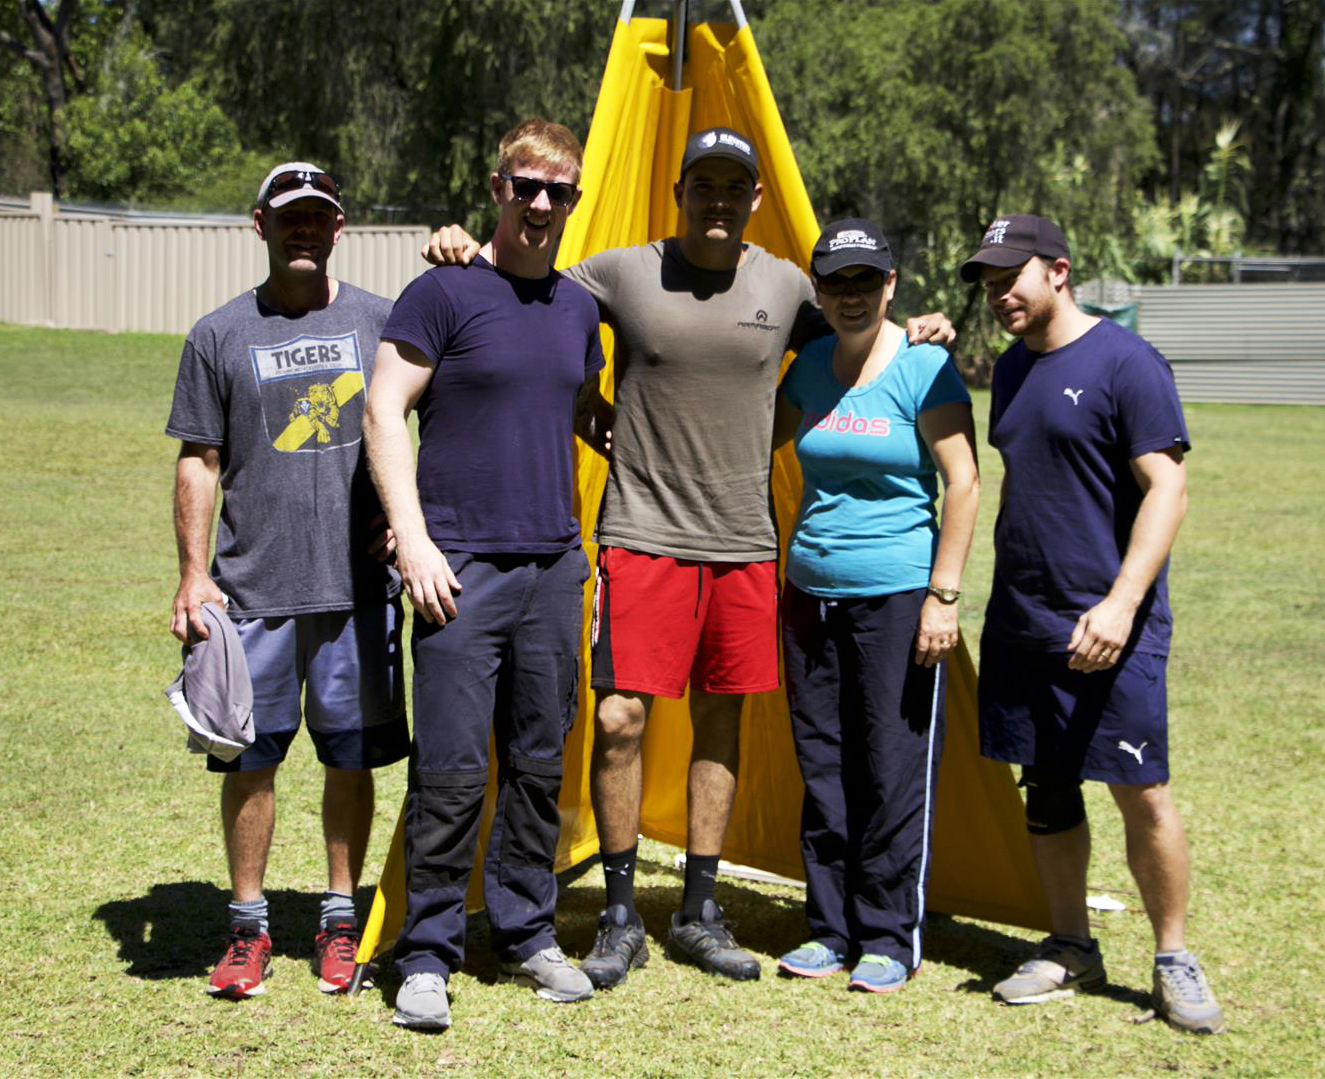 Oscar with the Working K9 Canberra Crew - Brett Keary, Jeremy Wikner, Oscar, Cheryl Neal and Luca Campanella.